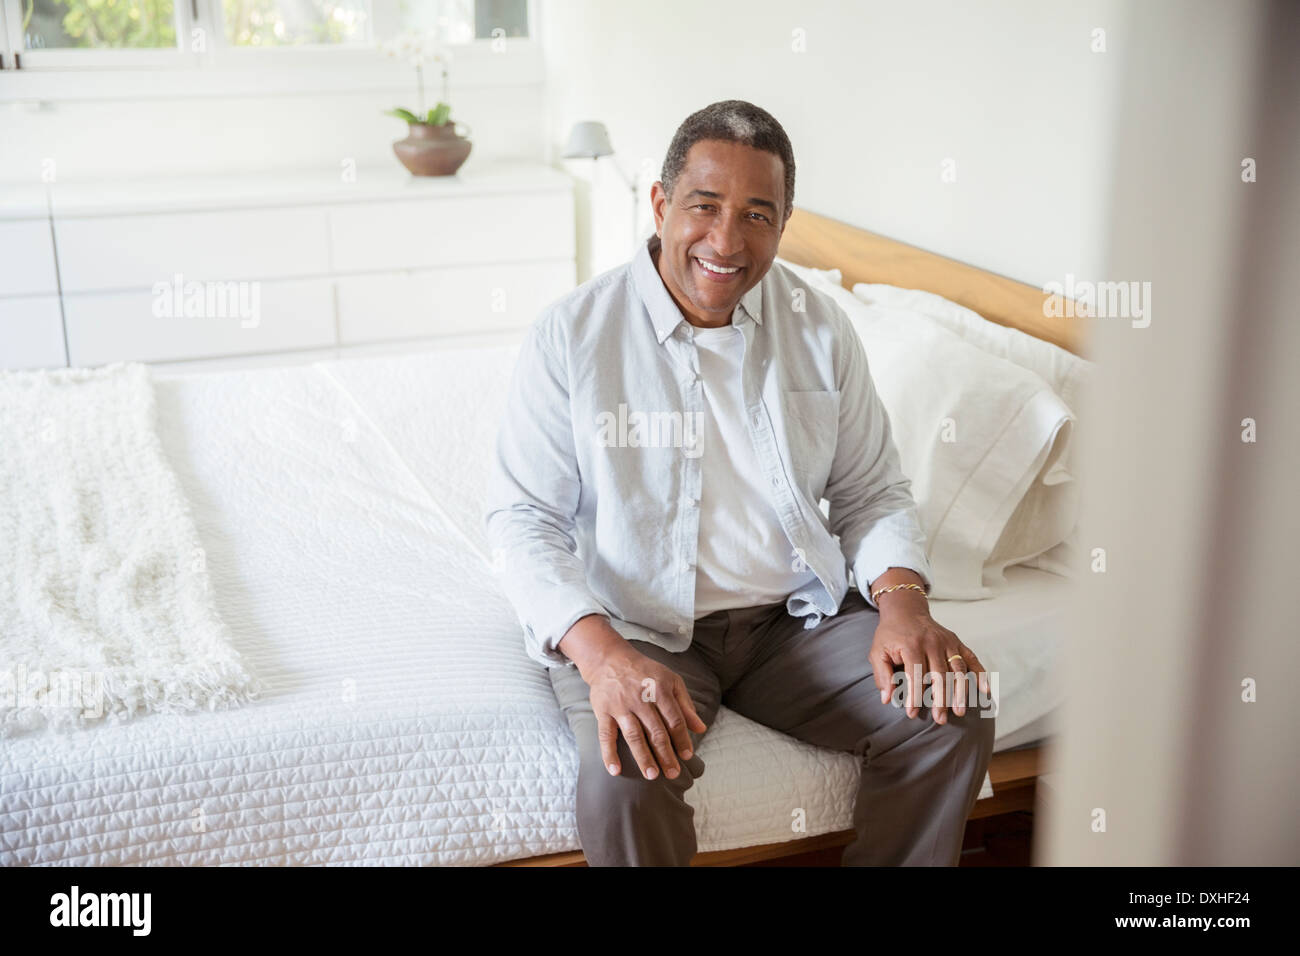 Portrait of smiling senior man sitting on bed Stock Photo